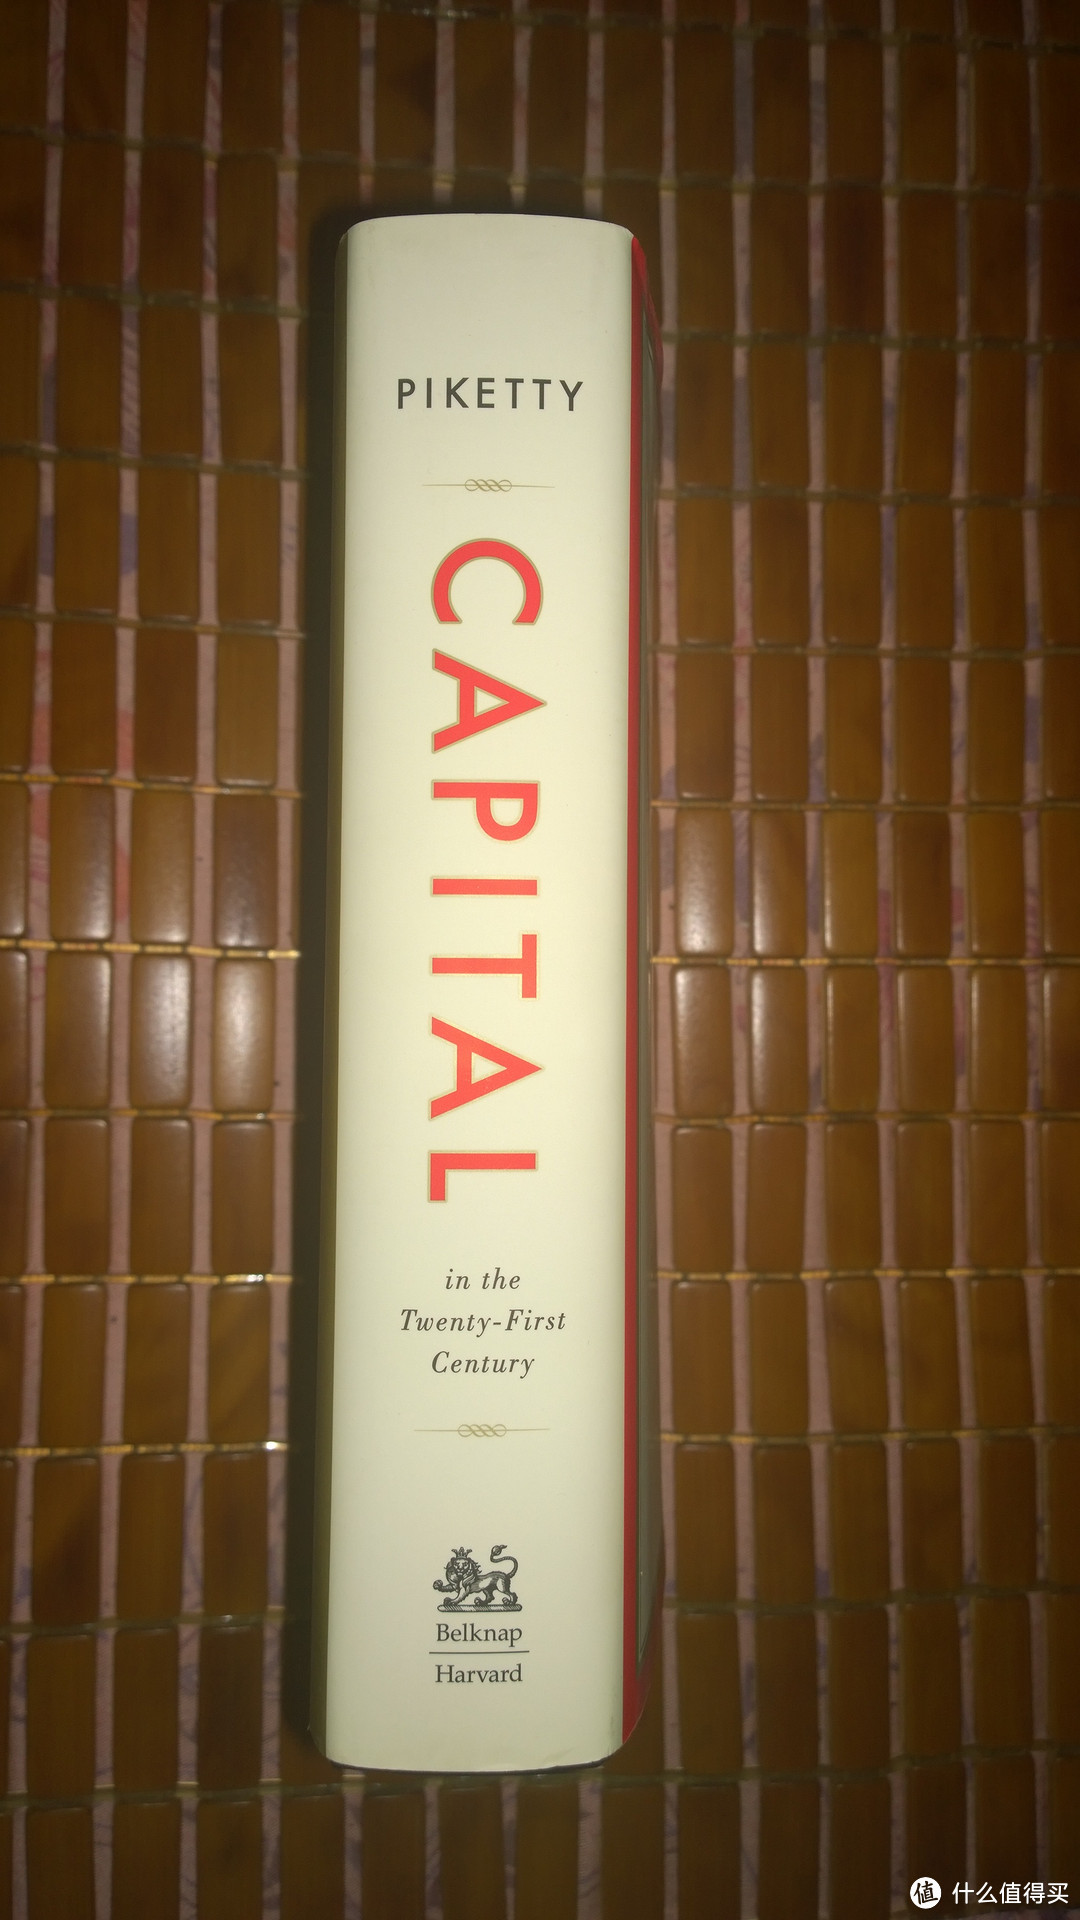 《Capital in the Twenty-First Century [二十一世纪资本论] 》